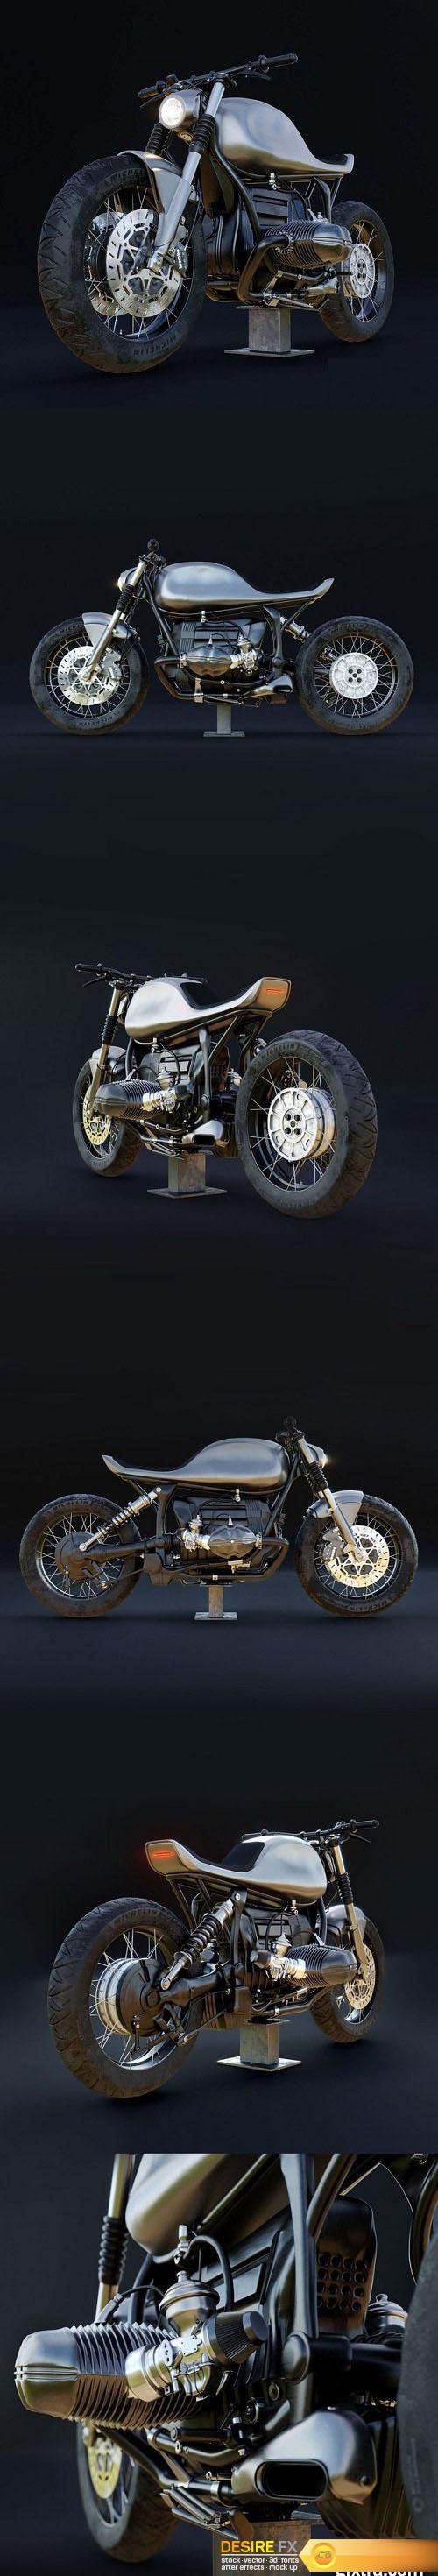 BMW R100R Motorcycle 3d Model